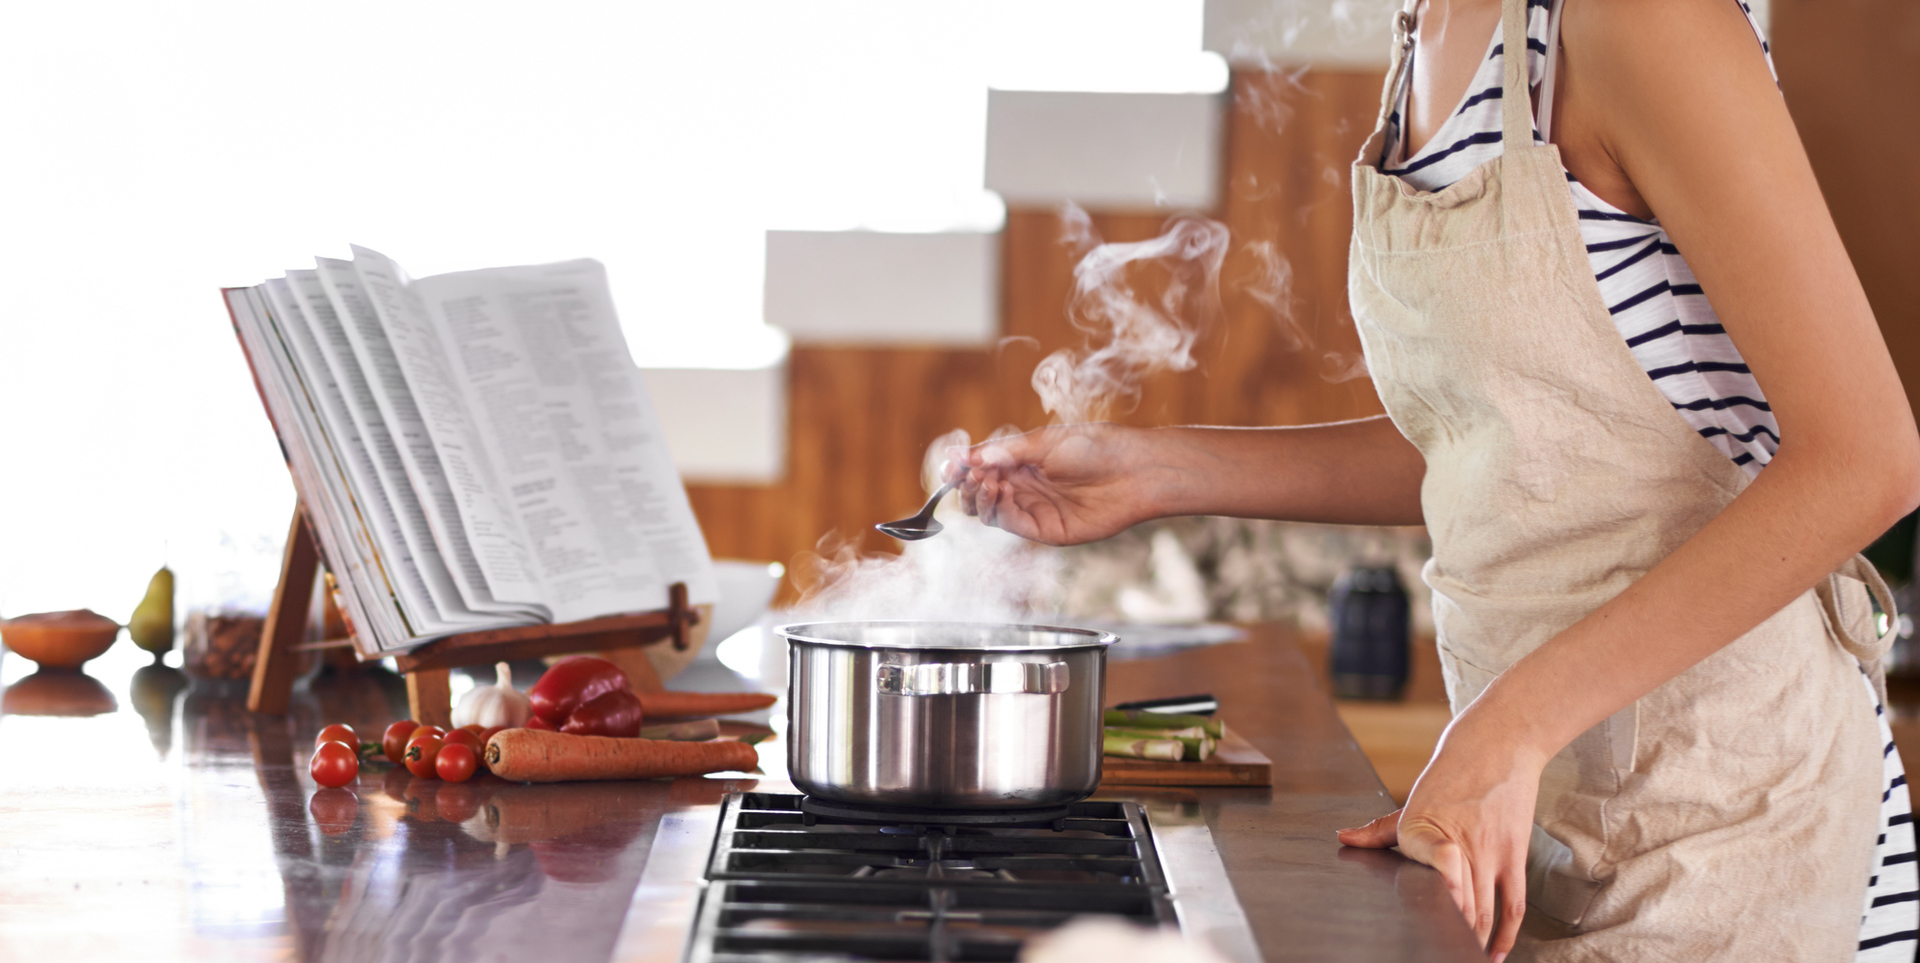 A person stood at their hob stirring a steaming pan